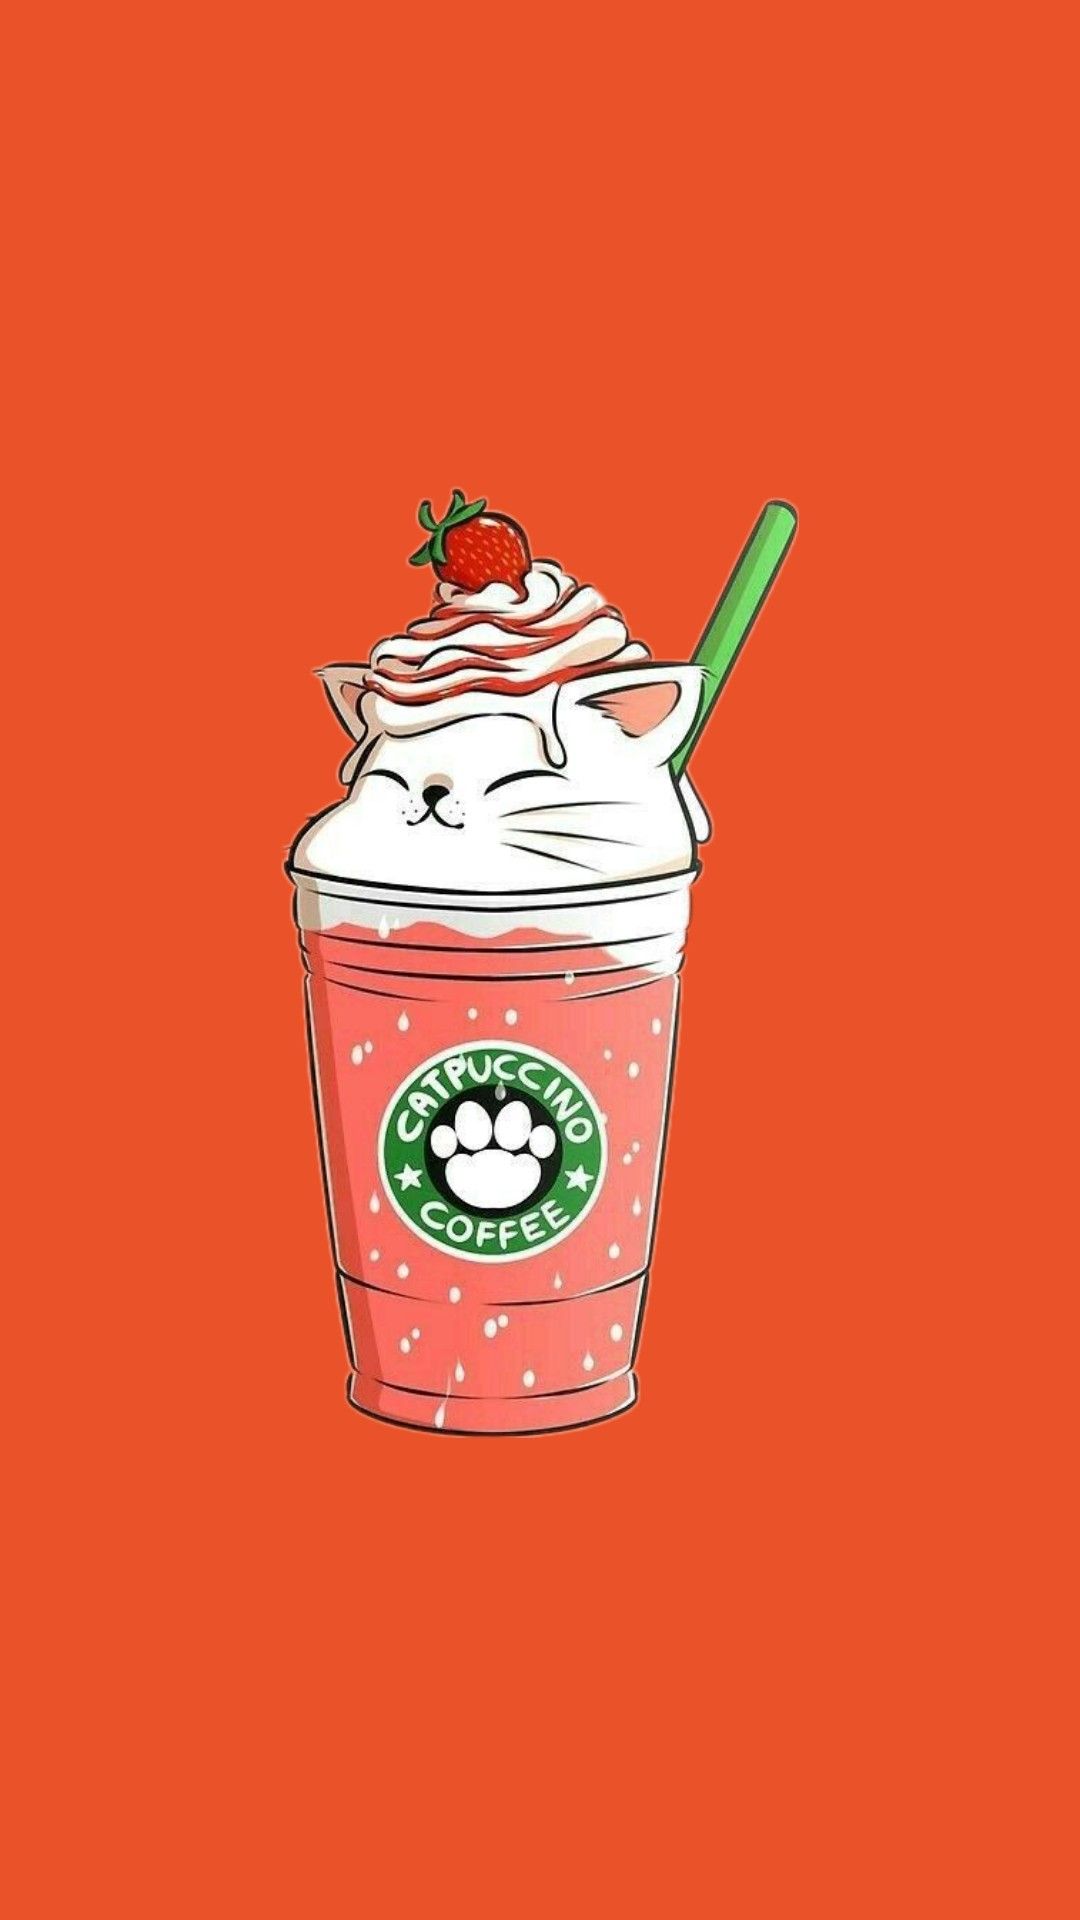 Wallpaper♡♡. Starbucks wallpaper, Cute food drawings, Wallpaper iphone cute